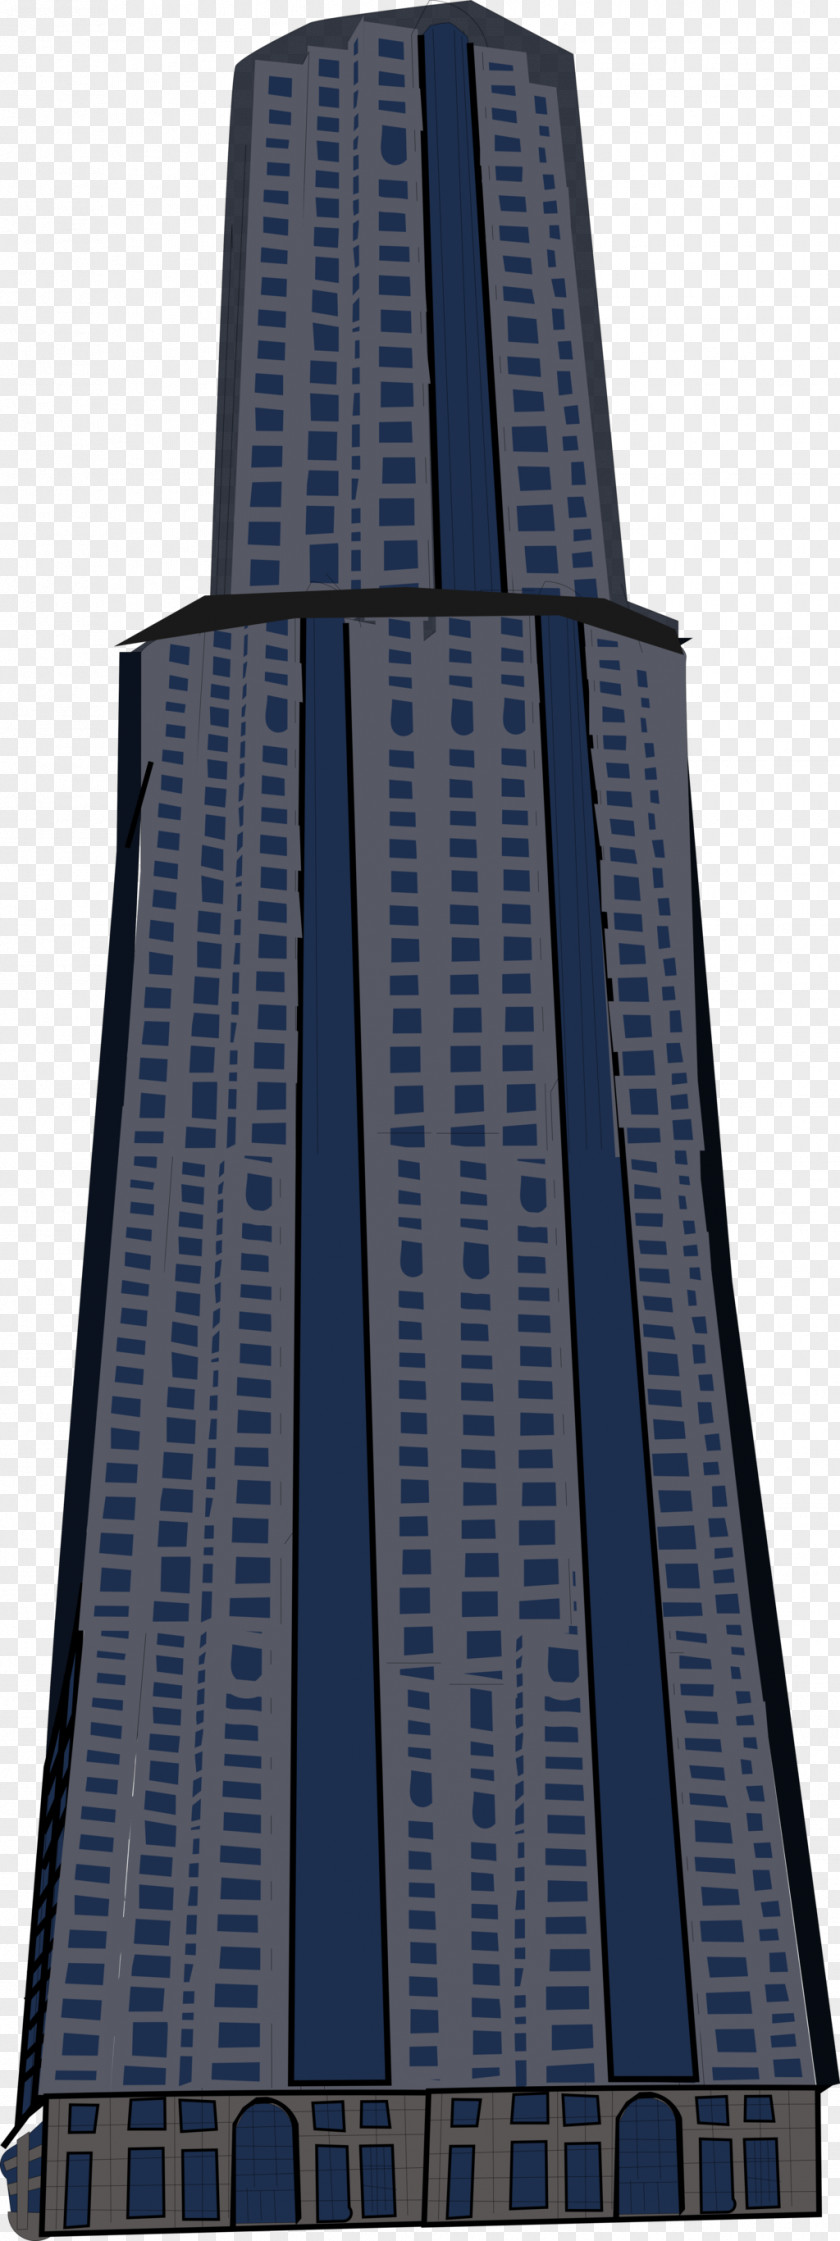 Skyscraper Facade Tower Commercial Building PNG